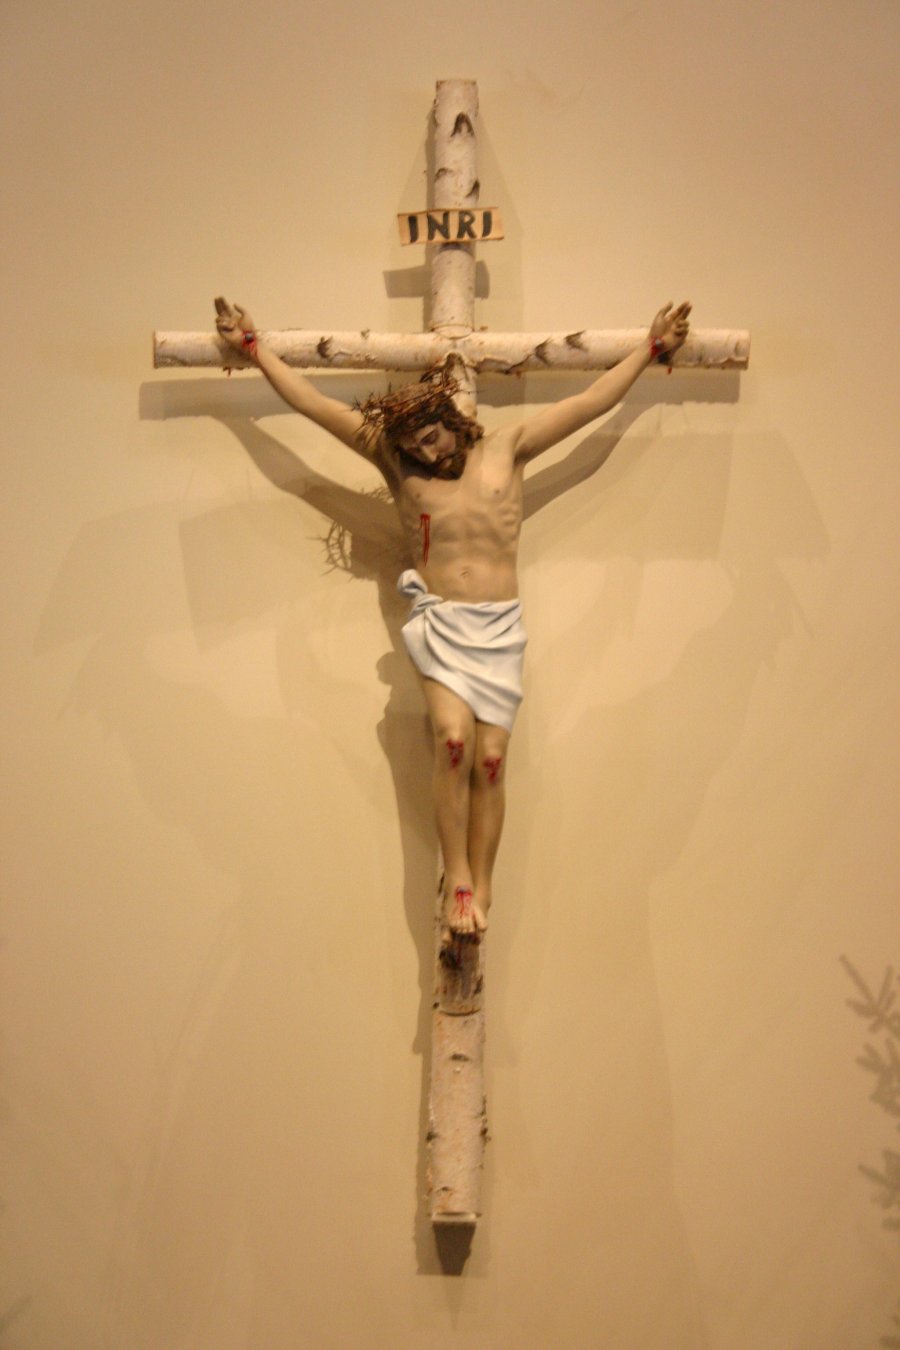 45 Catholic Wallpaper Crucifix On Wallpapersafari